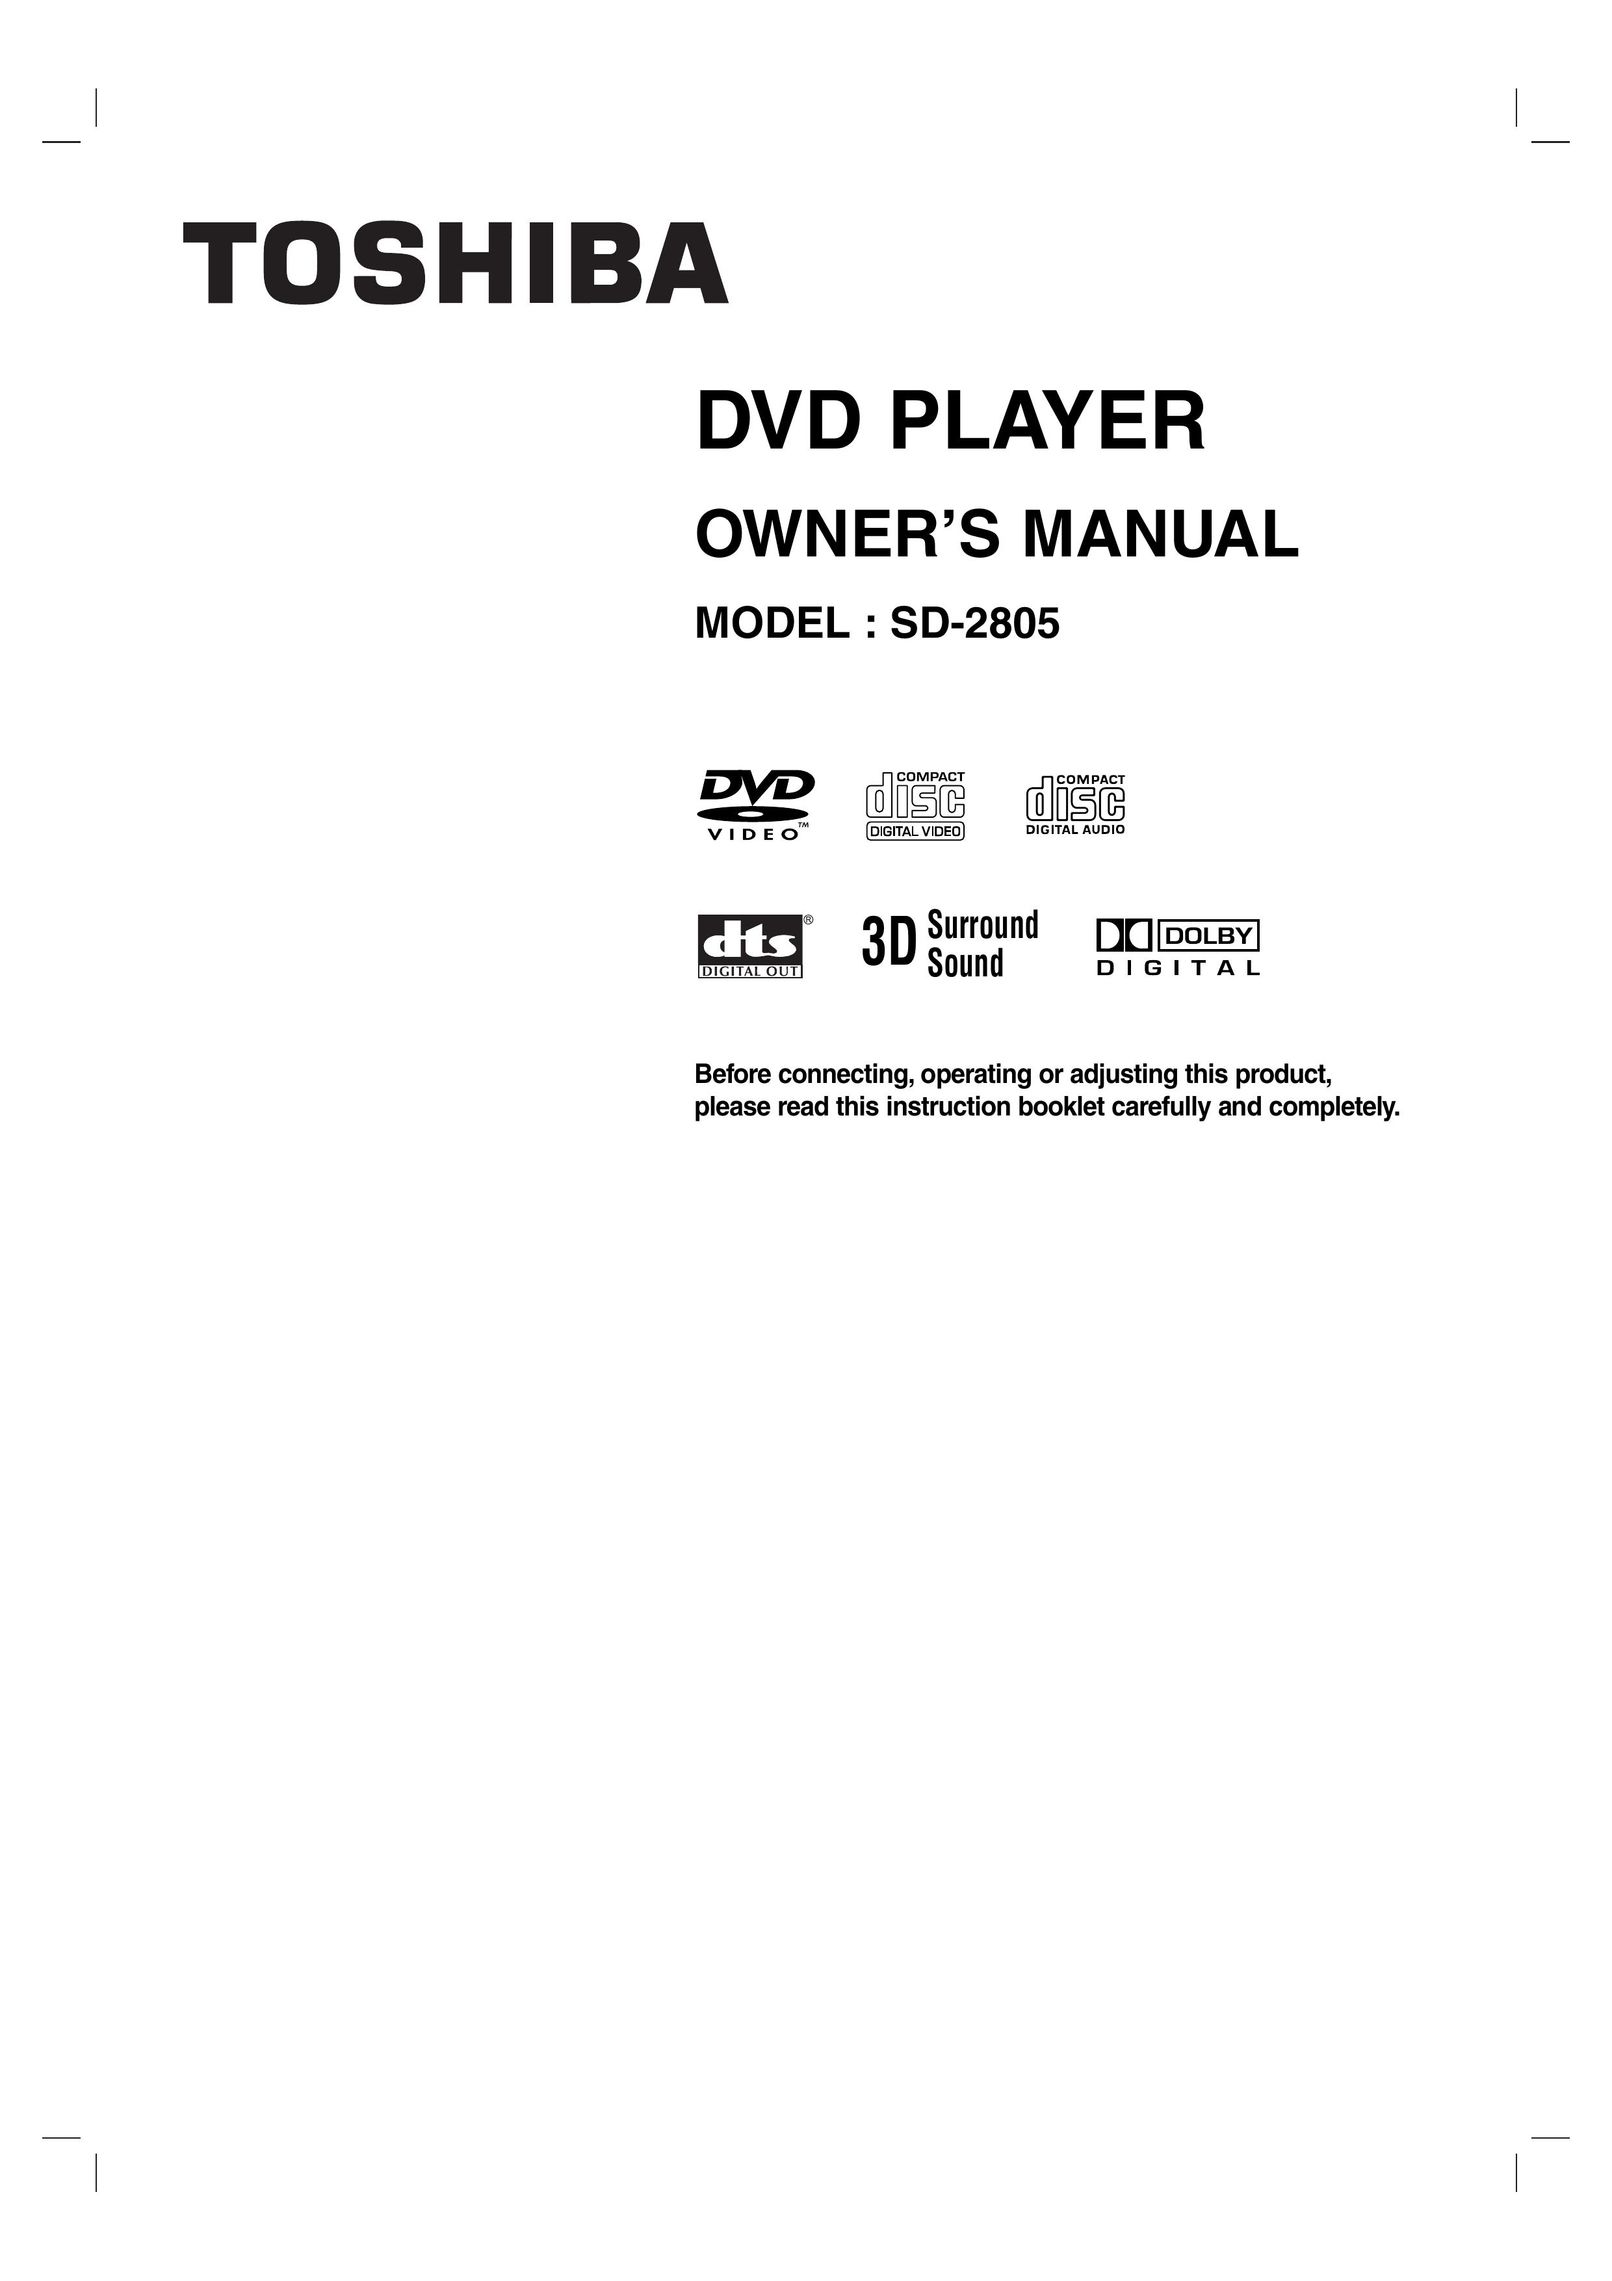 GE SD-2805 DVD Player User Manual